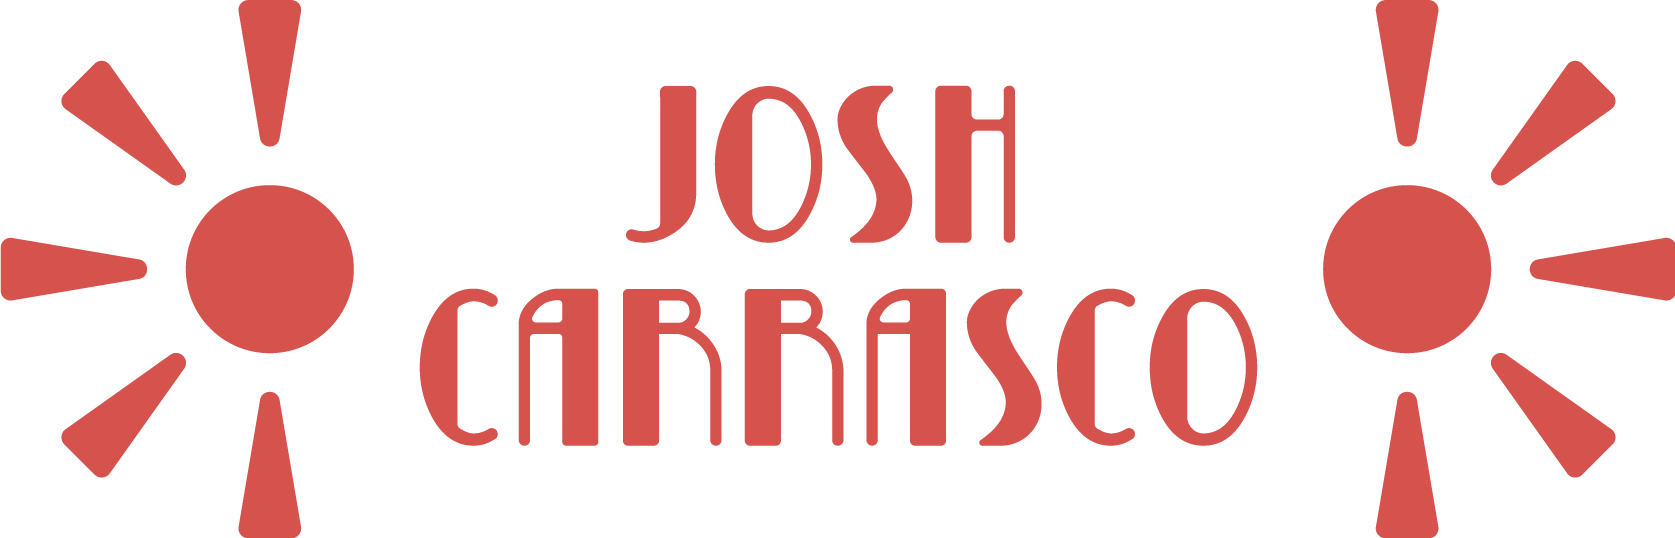 JoshCarrasco